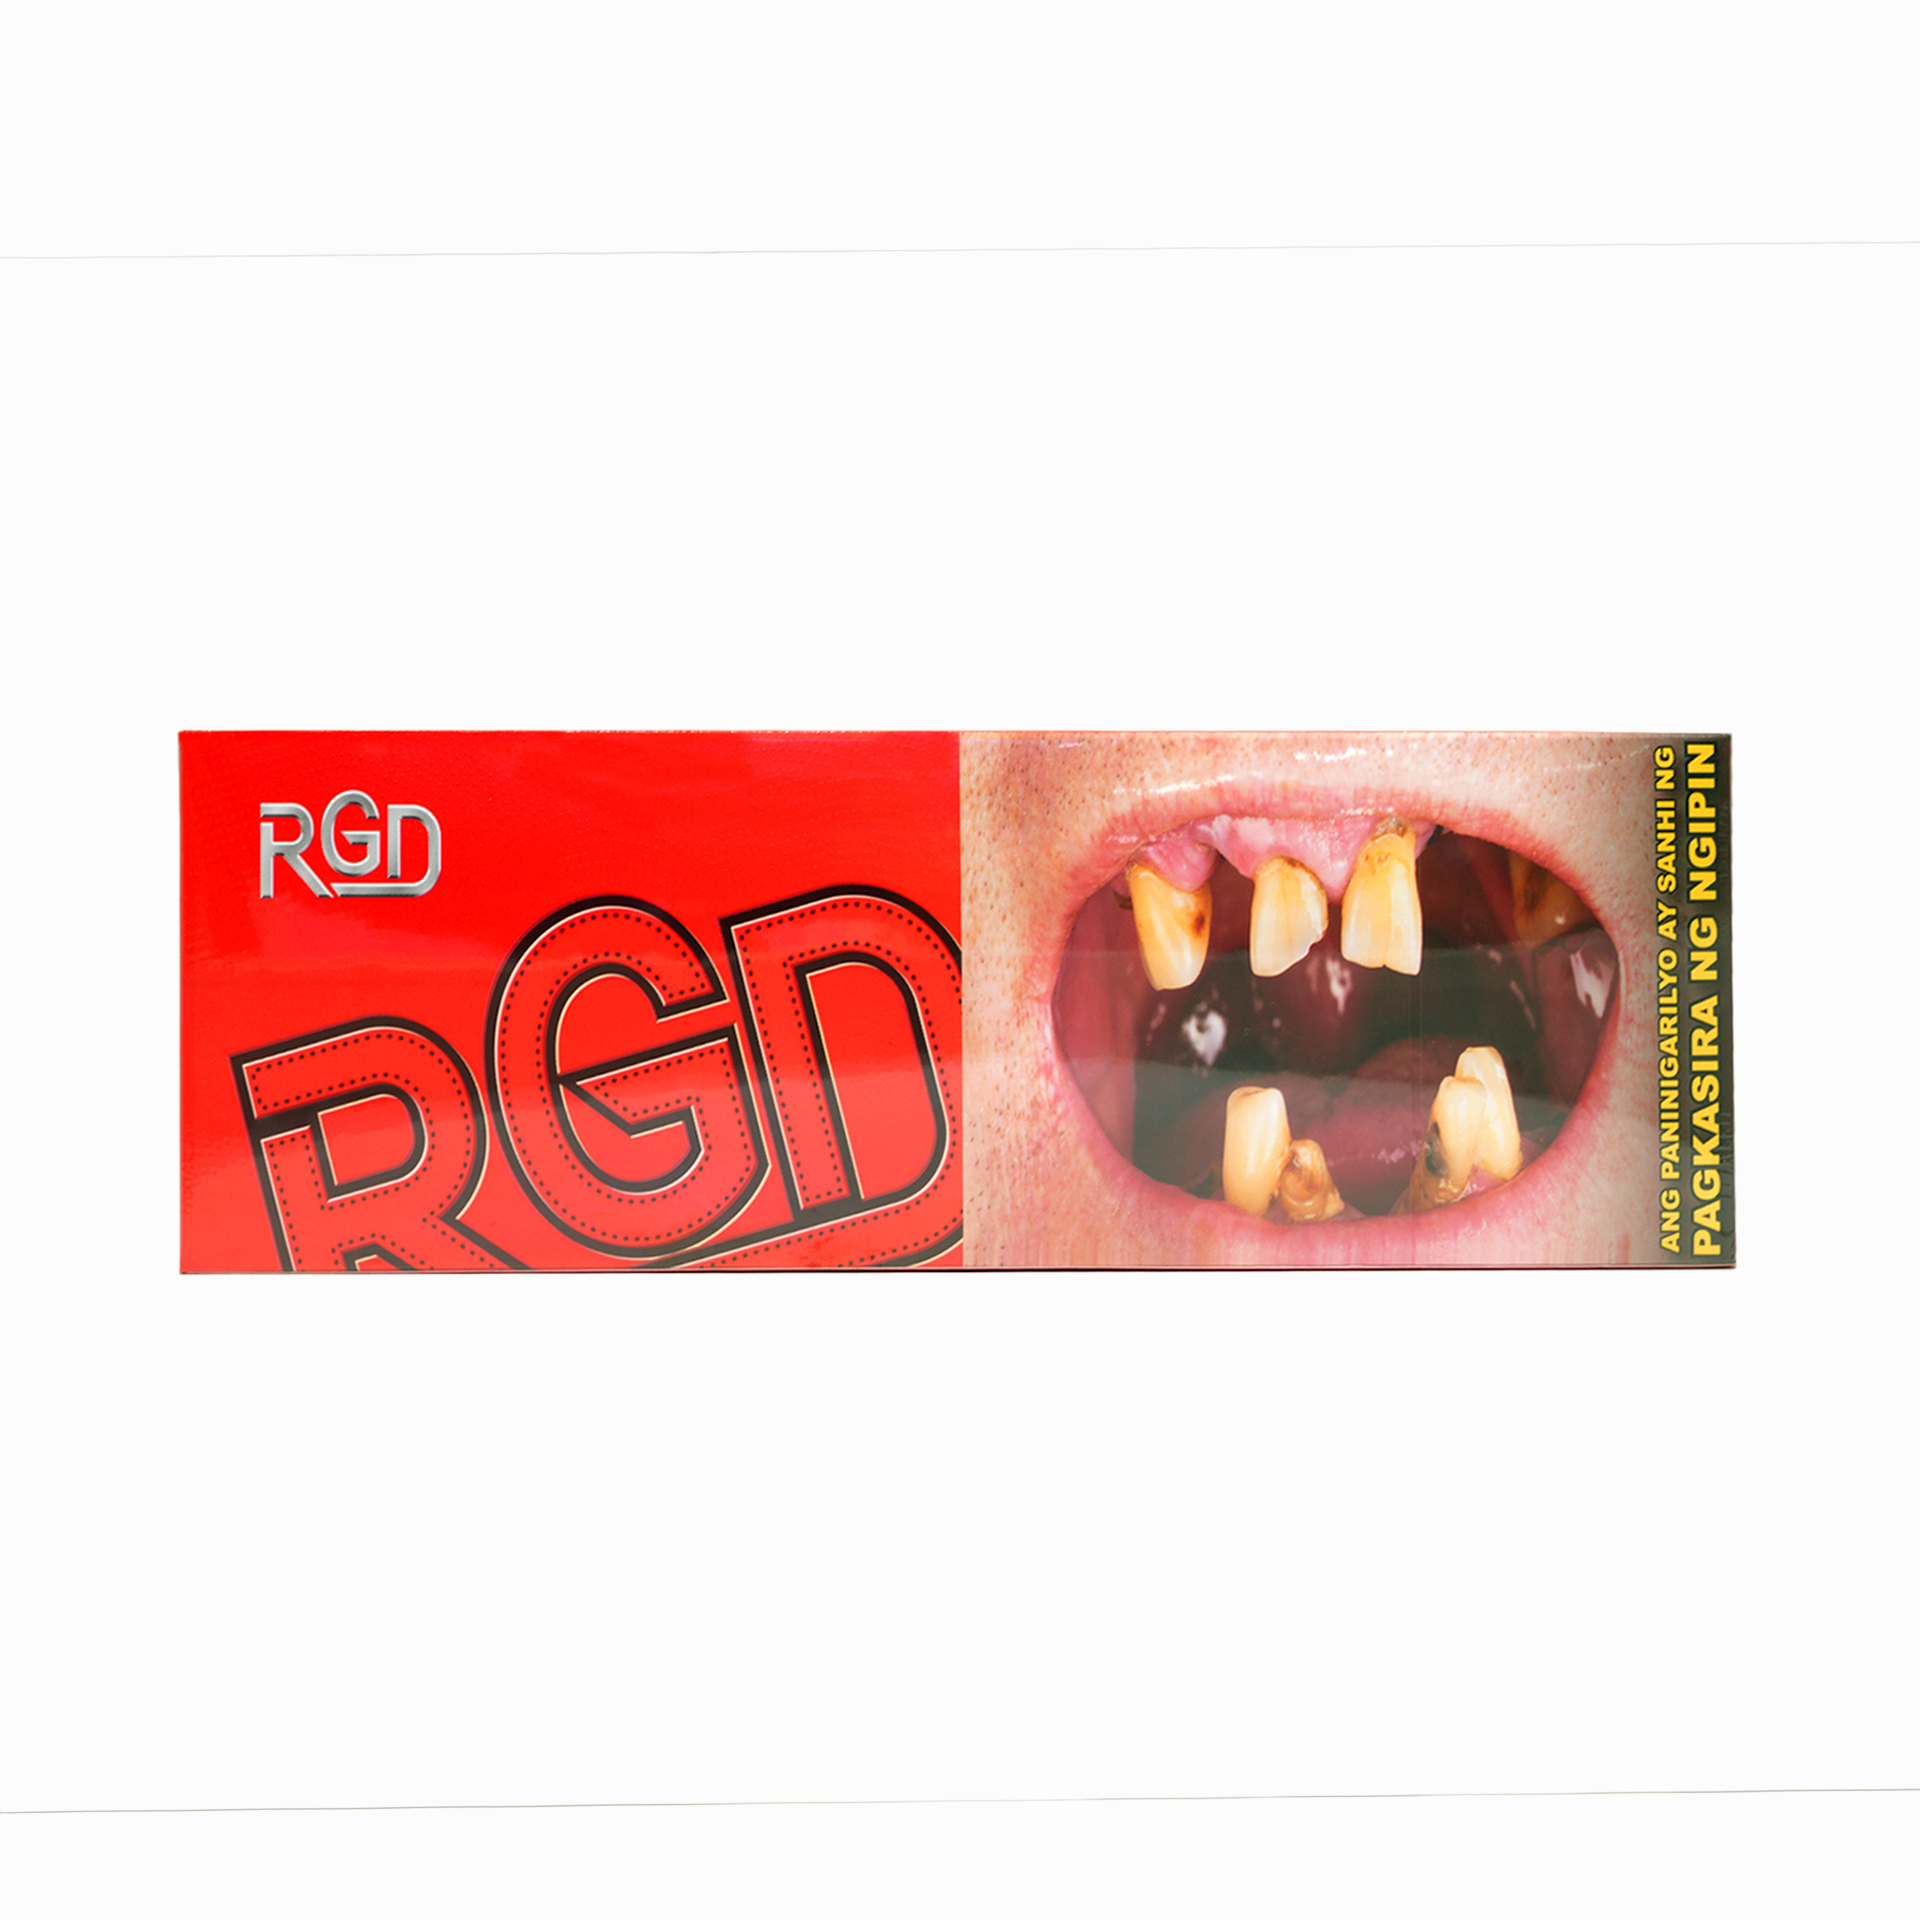 RGD Cigar Red